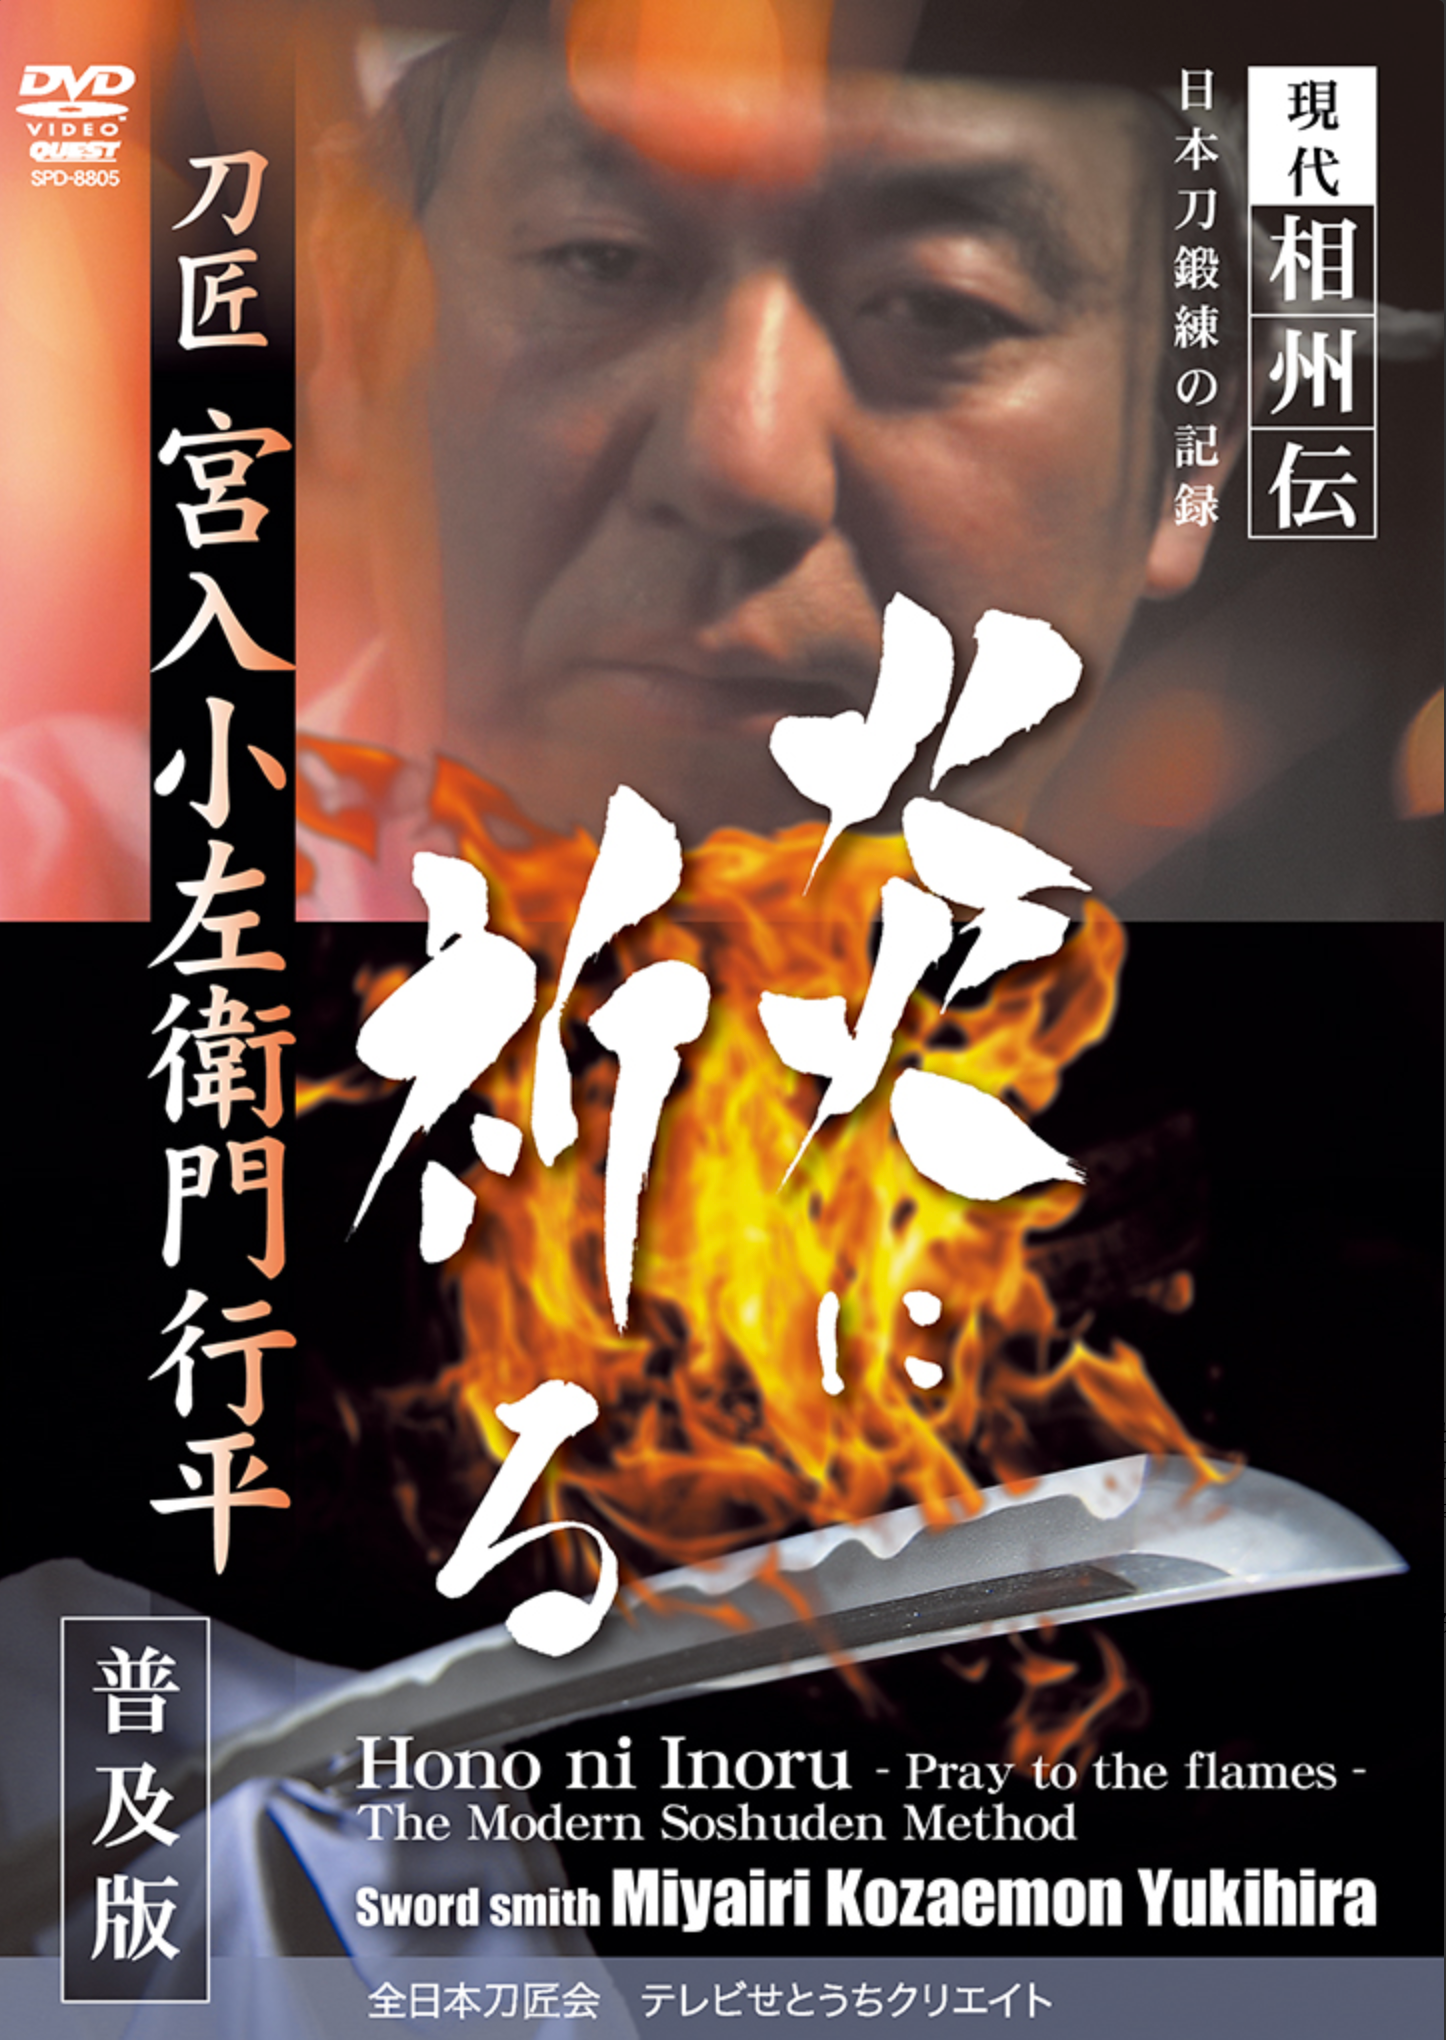 Pray to the Flames: Modern Soshuden Swordmaking Method DVD by Miyairi Kozaemon Yukihira - Budovideos